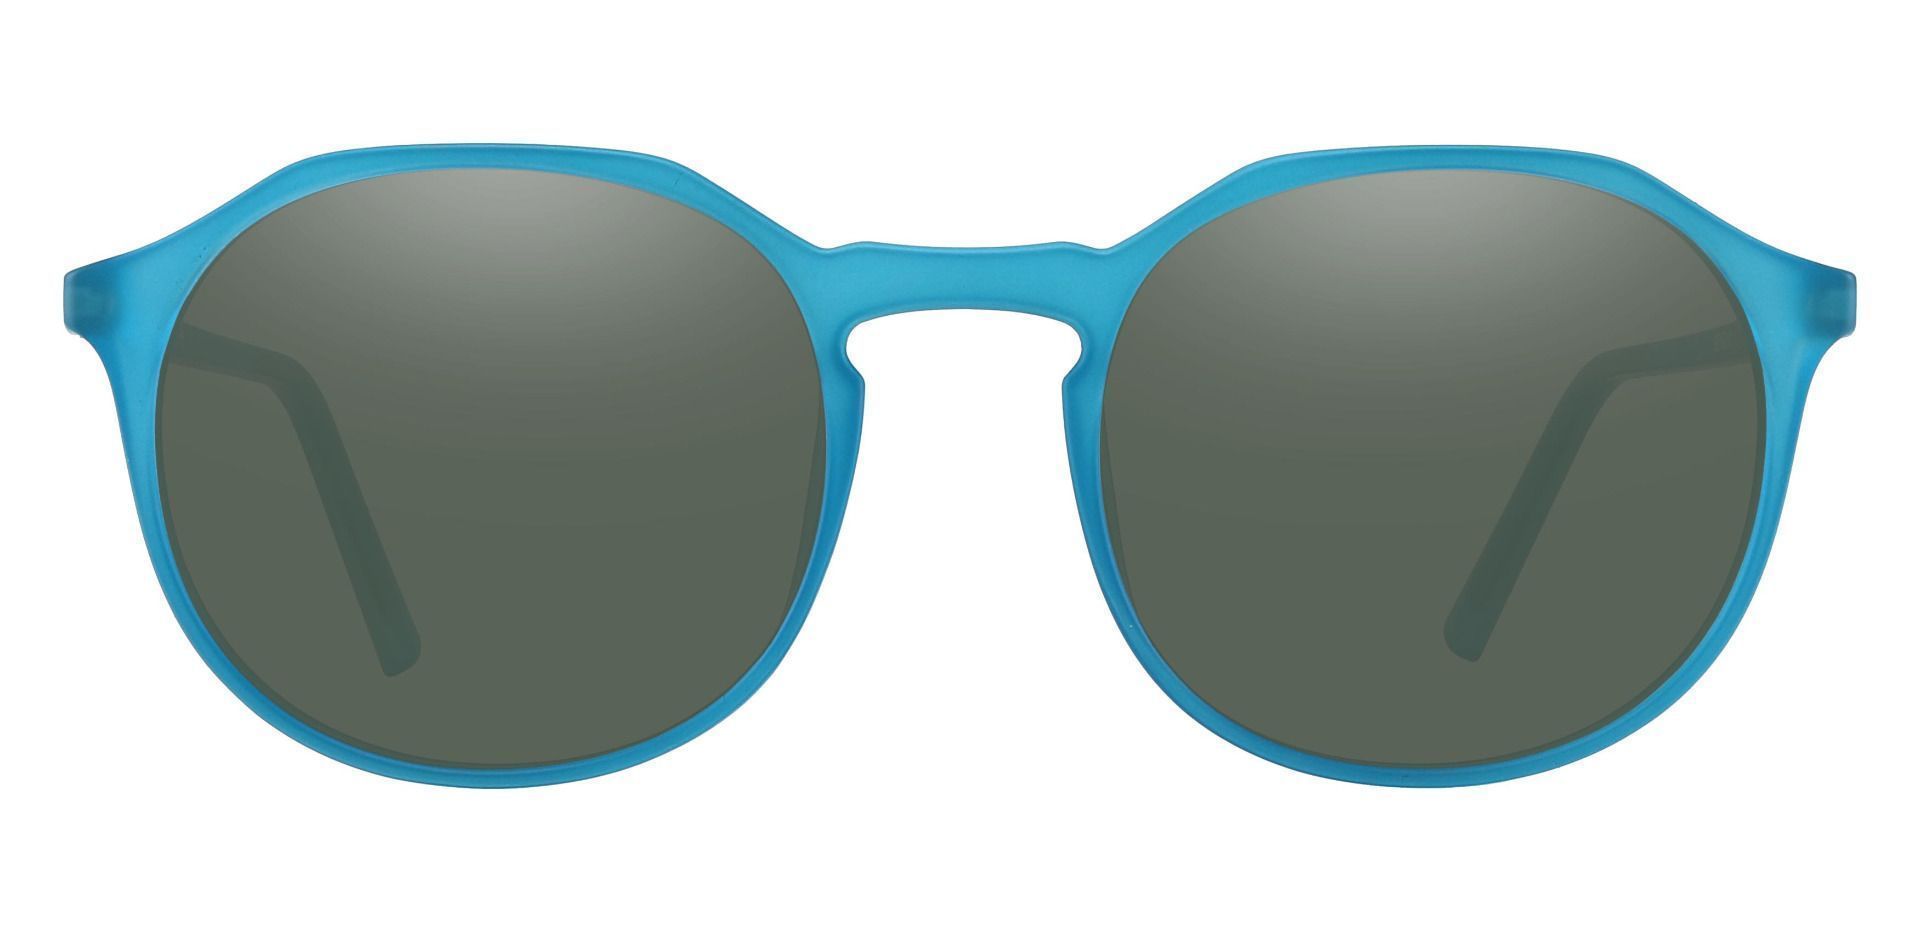 Belvidere Geometric Reading Sunglasses - Blue Frame With Green Lenses